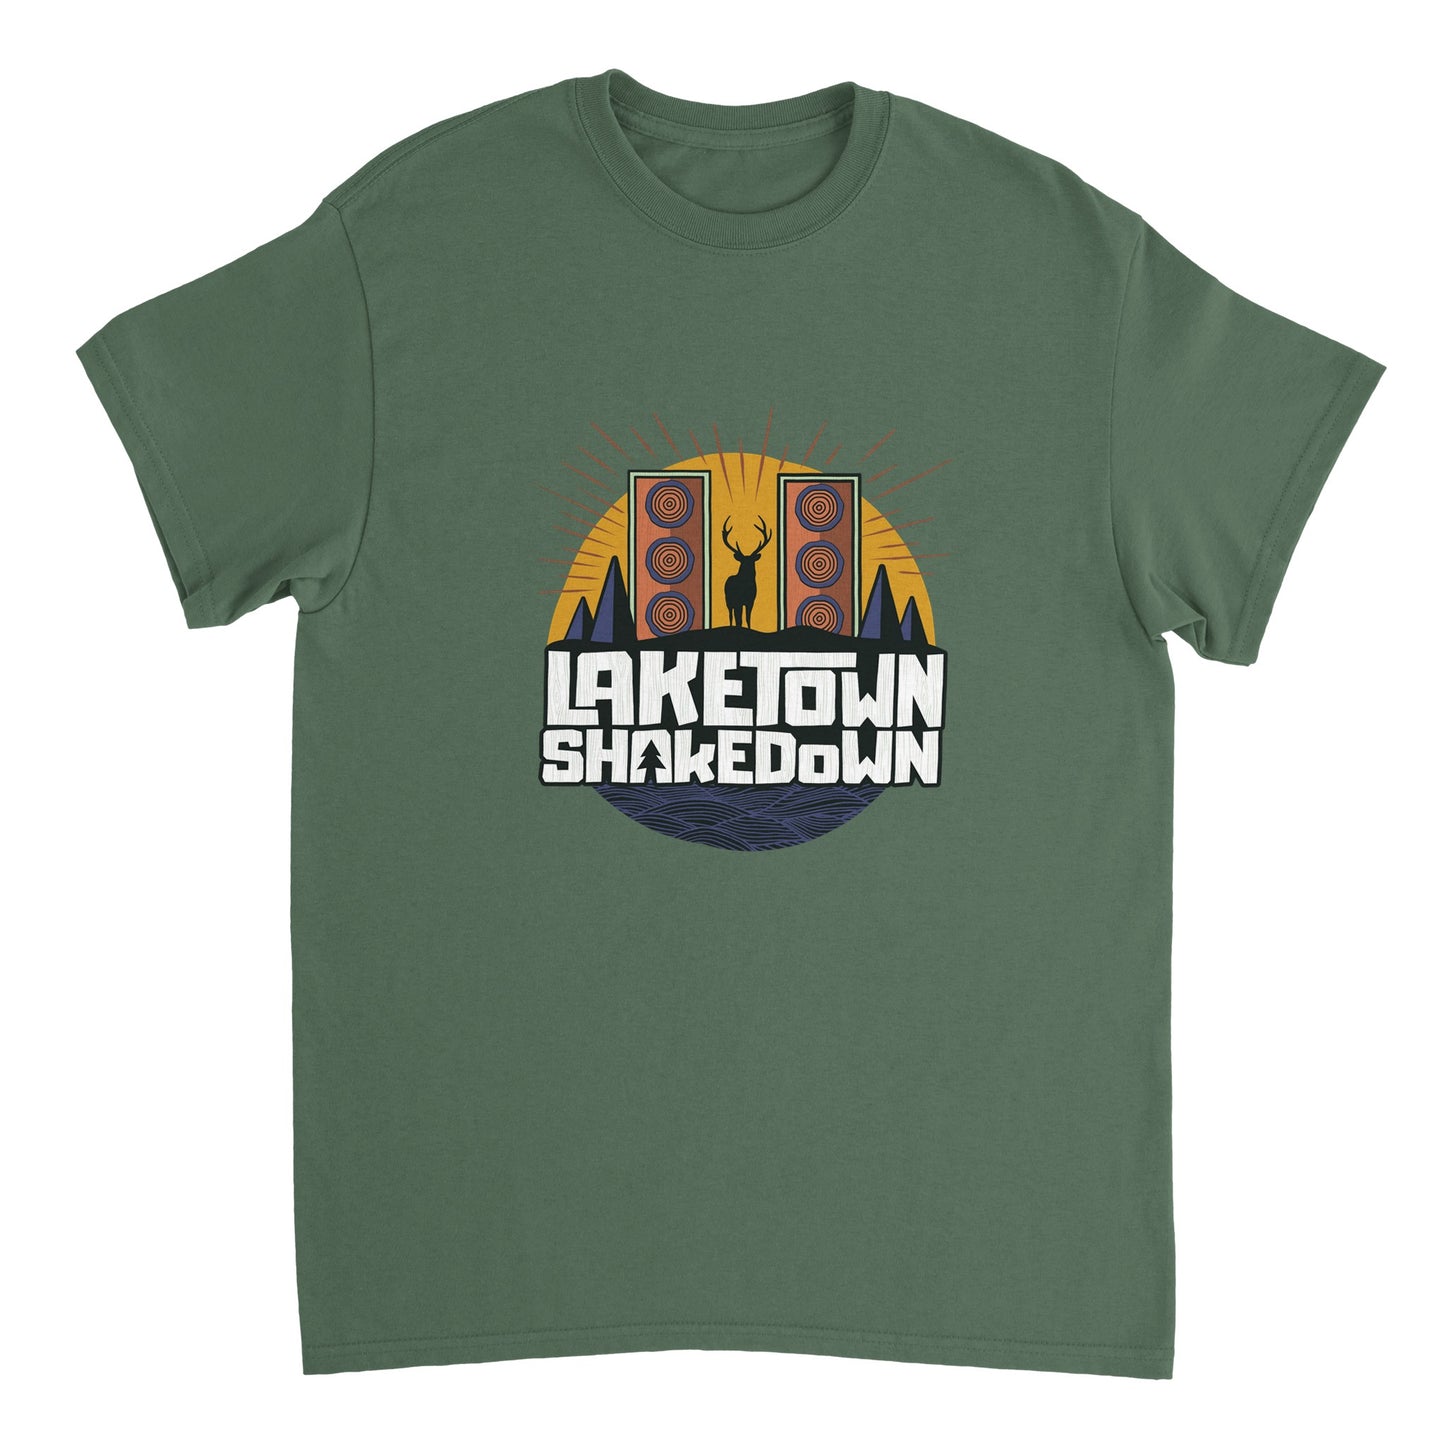 Shakedown - Logomark - Heavyweight Unisex Crewneck T-shirt